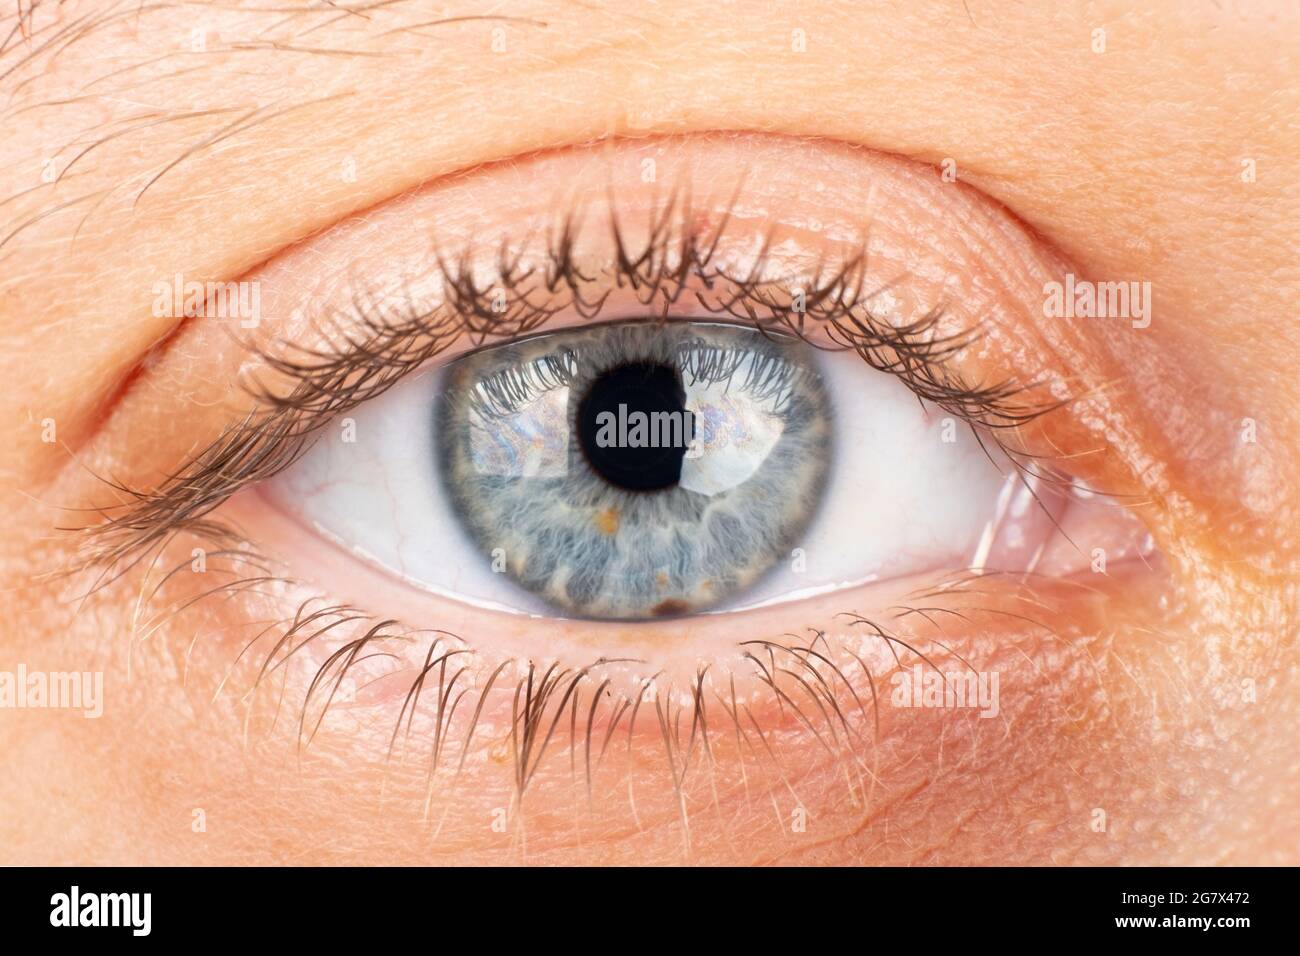 beautiful female eye, diagnosis of keratoconus corneal dystrophy. Stock Photo